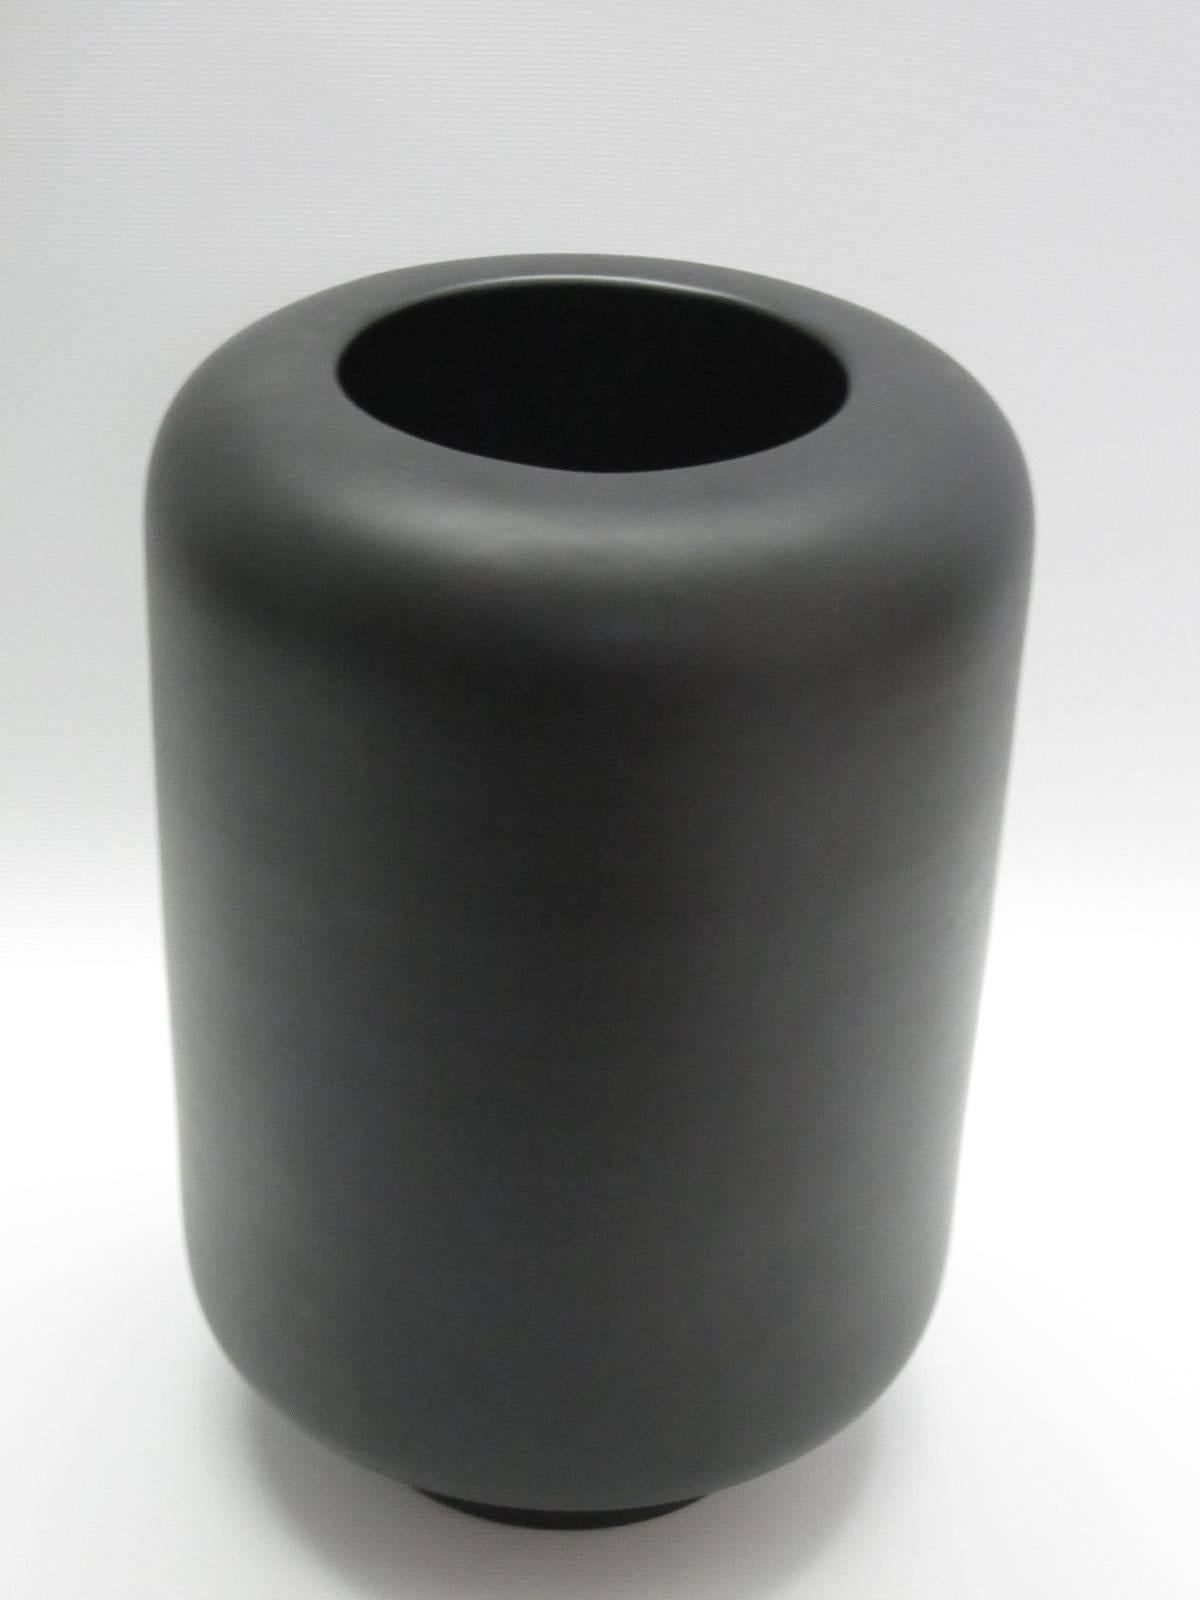 Italian Tom Ford for Gucci Matte Black Ceramic Vase, Signed